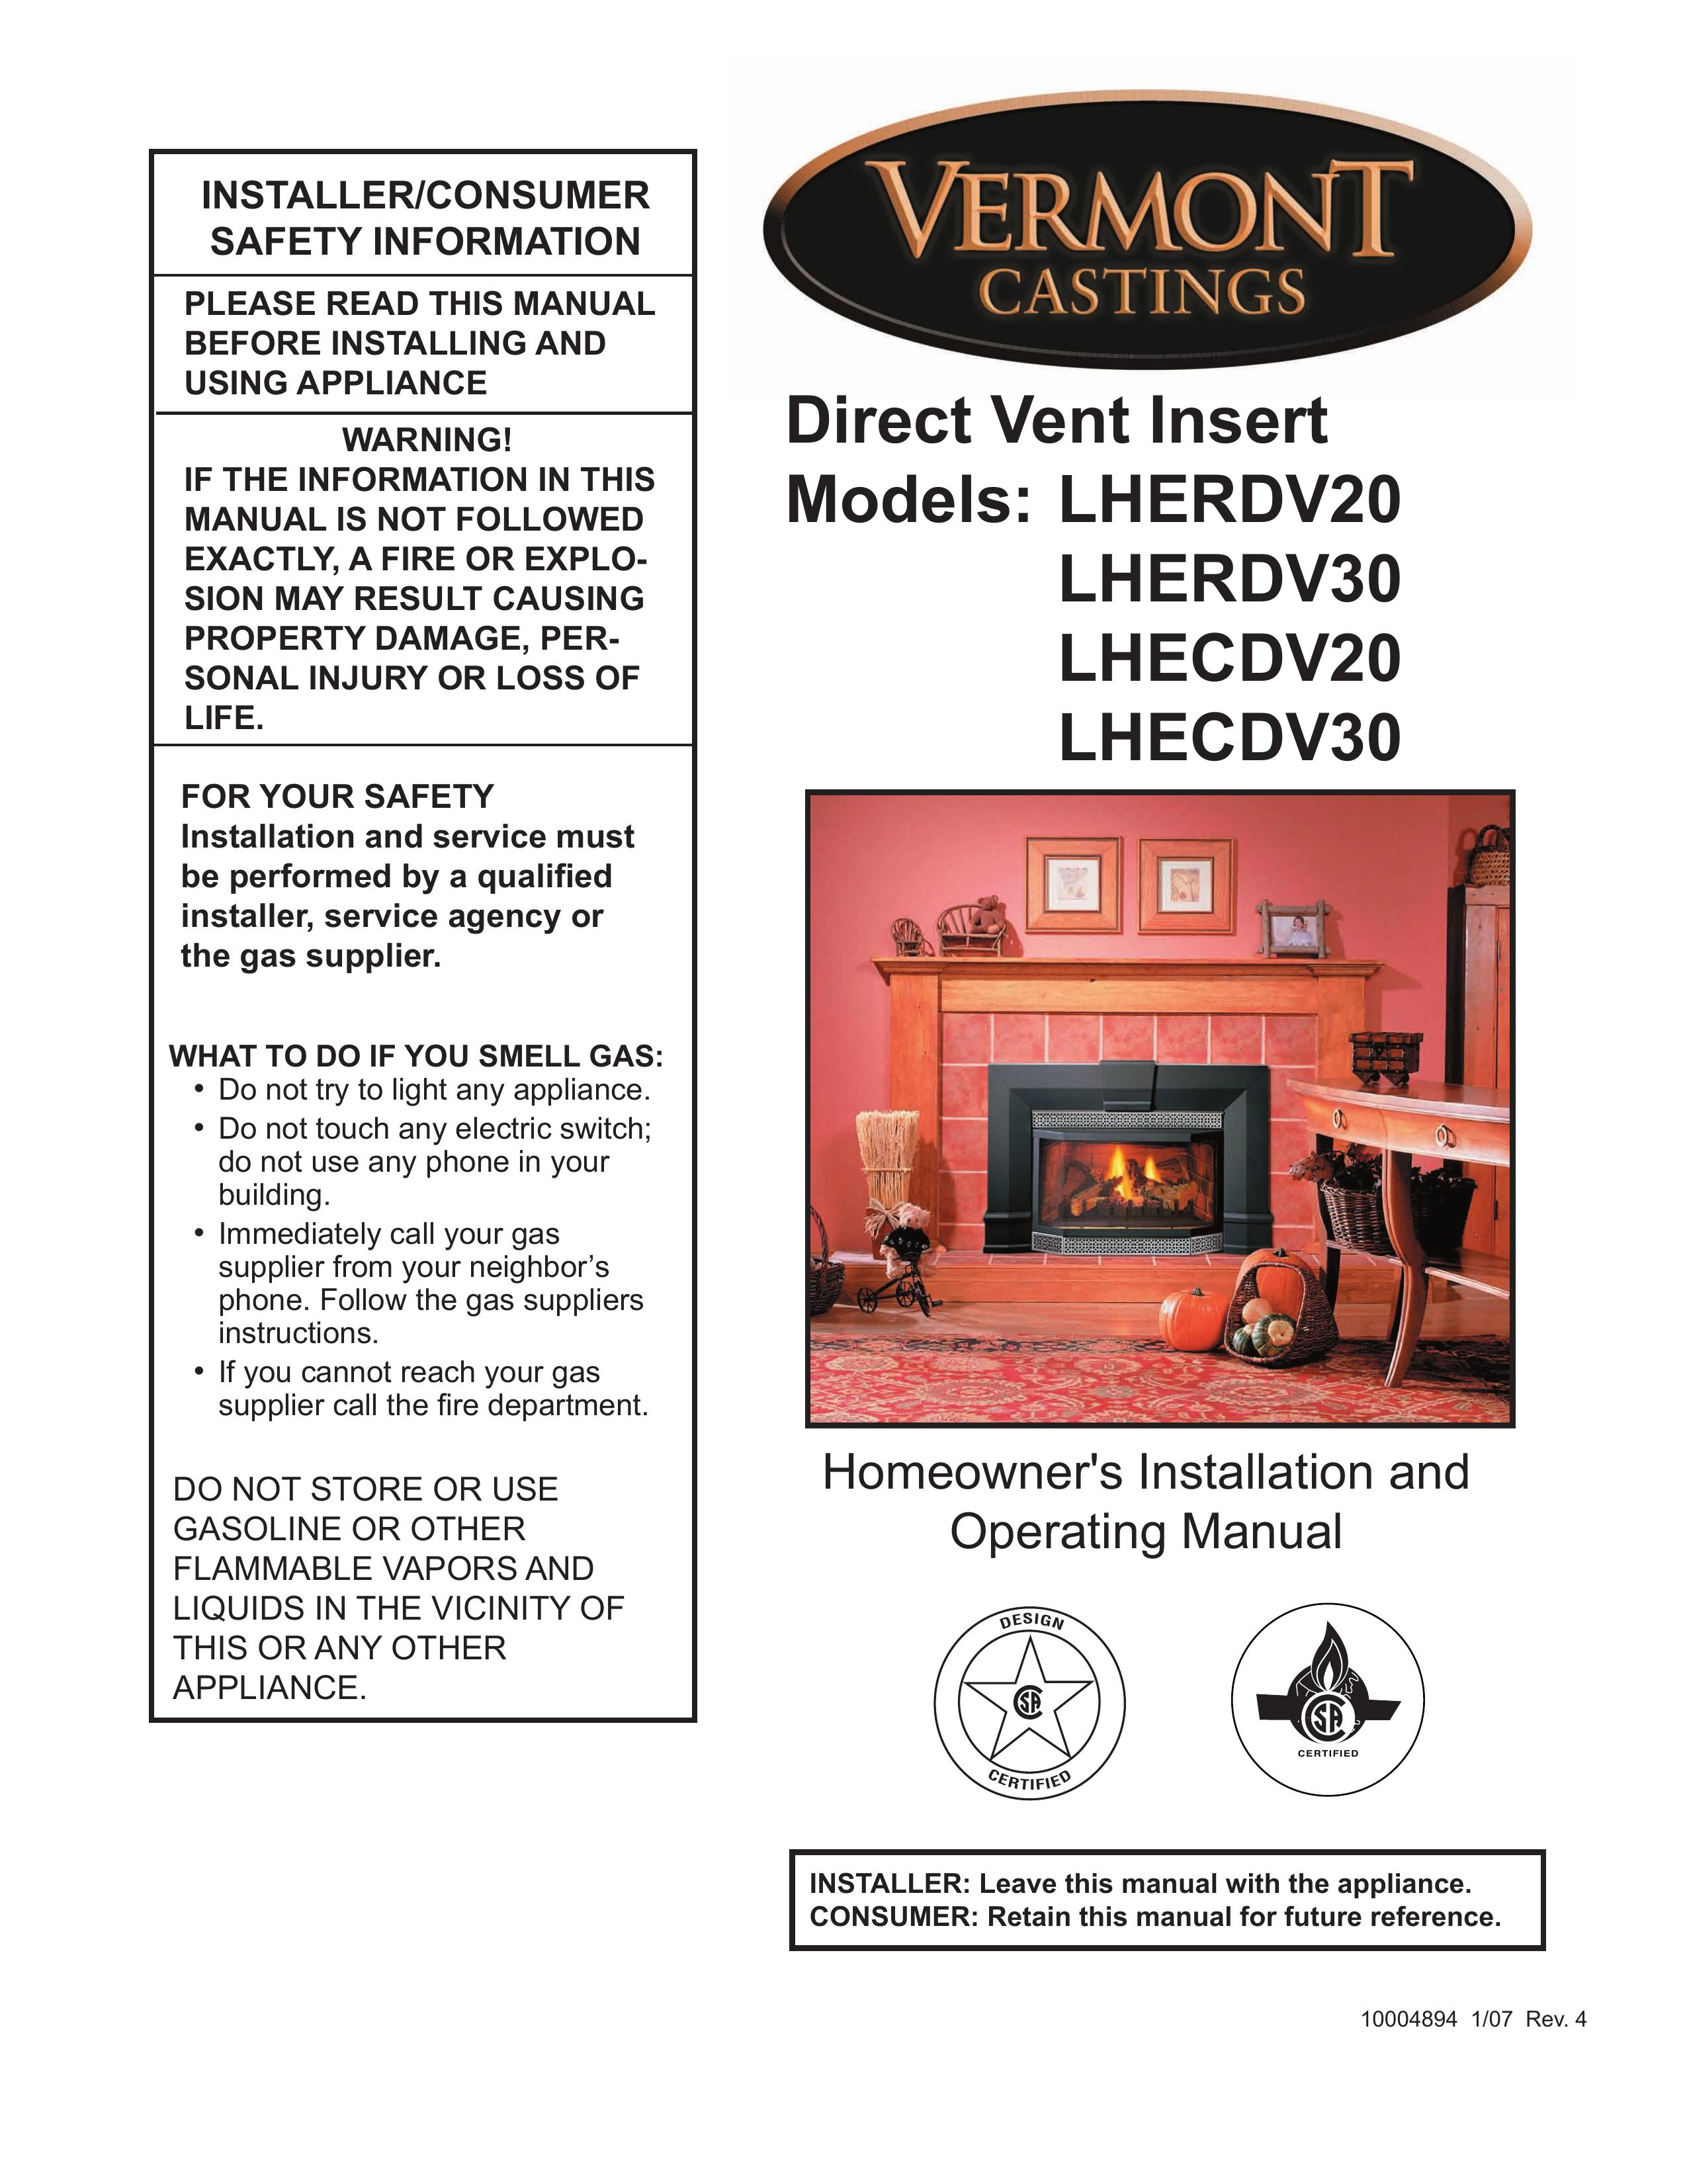 Vermont Casting LHECDV20 Ventilation Hood User Manual